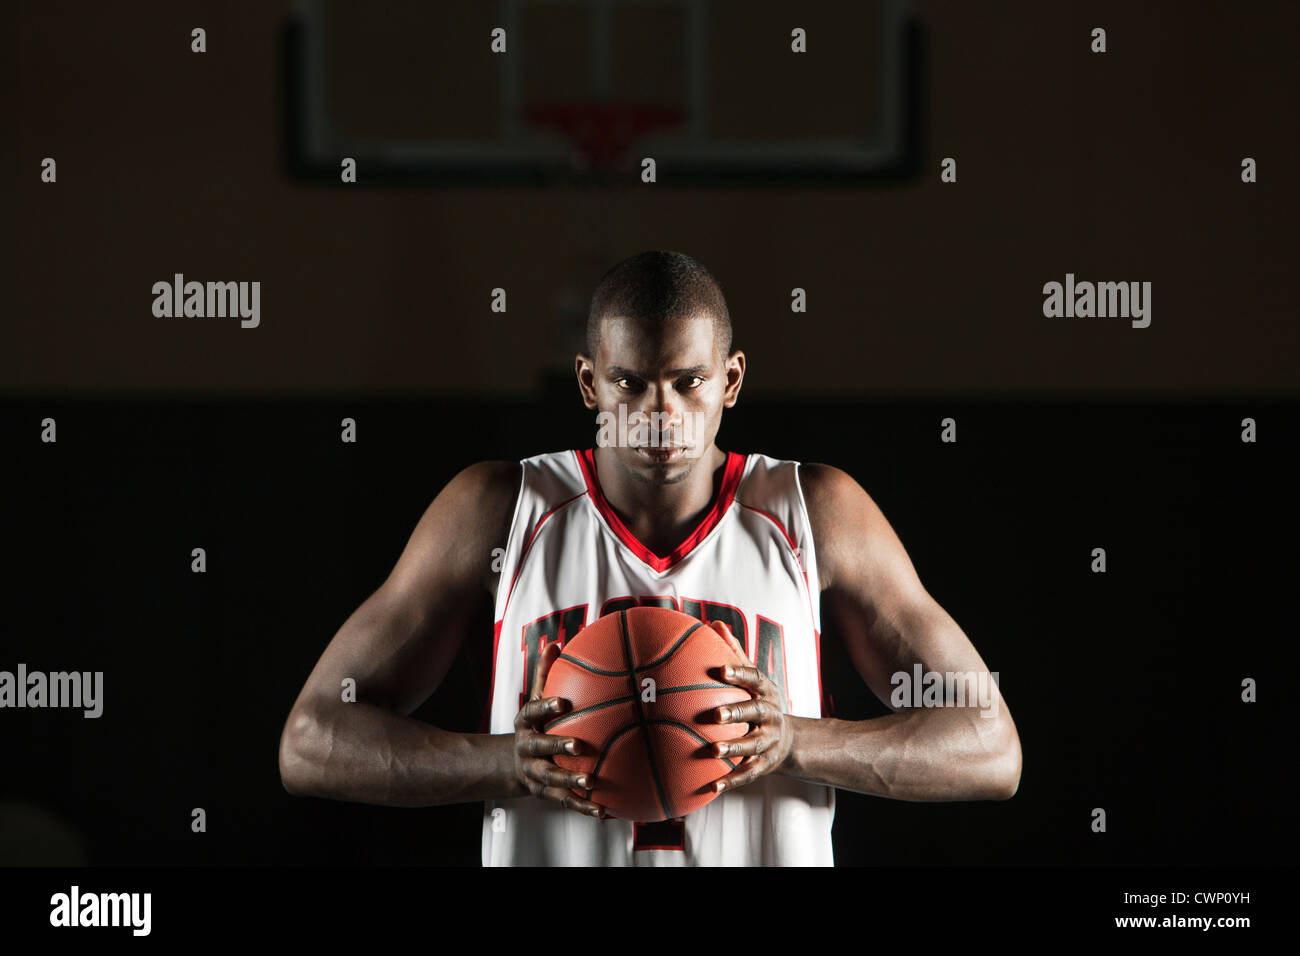 Basketball player preparing to shoot basket Stock Photo